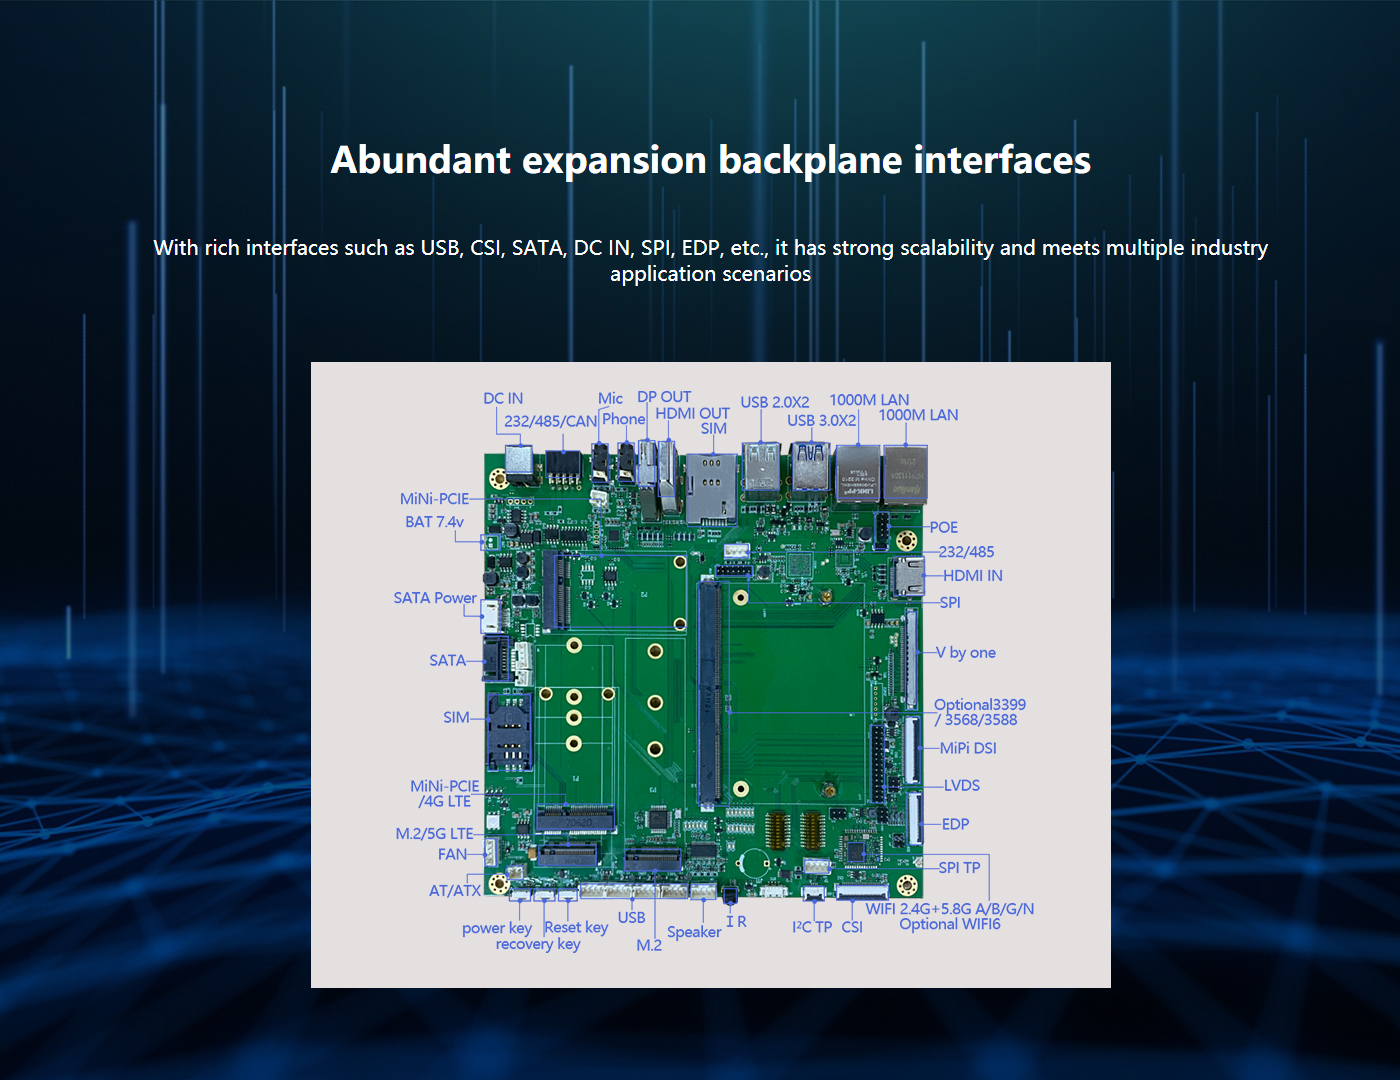 JHC-993 versatile six-core intelligent core board